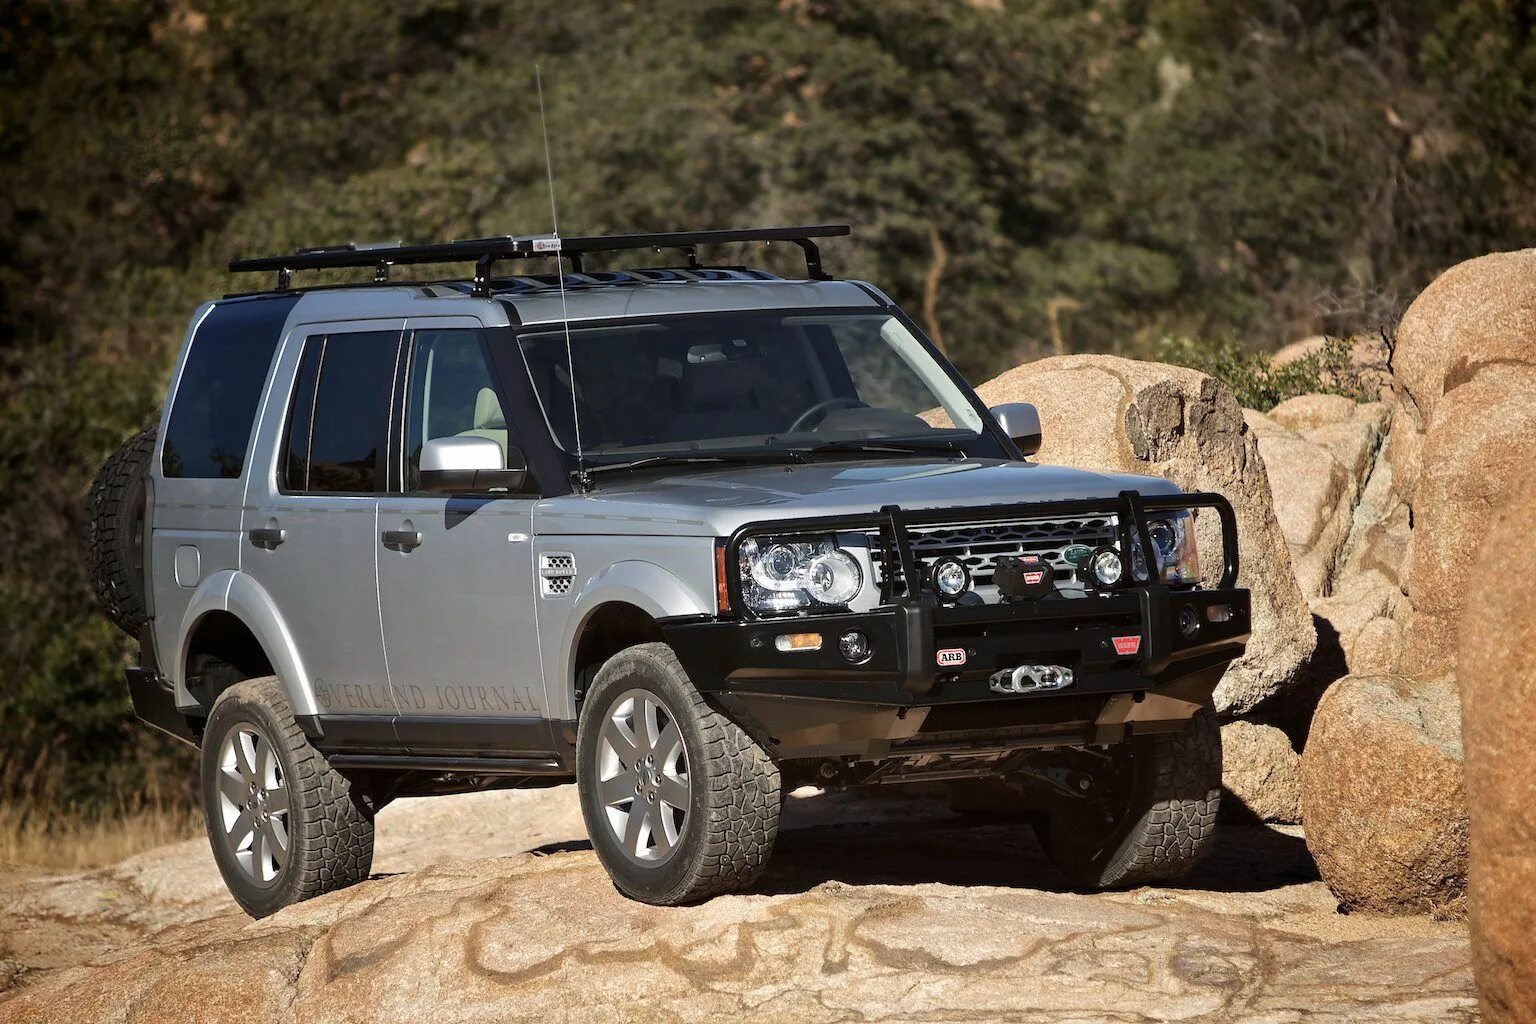 Ленд Ровер Дискавери 4. Ленд Ровер Дискавери 4 Expedition. Land Rover Discovery 3 Expedition. Land Rover lr3/Discovery 3. Вине дискавери